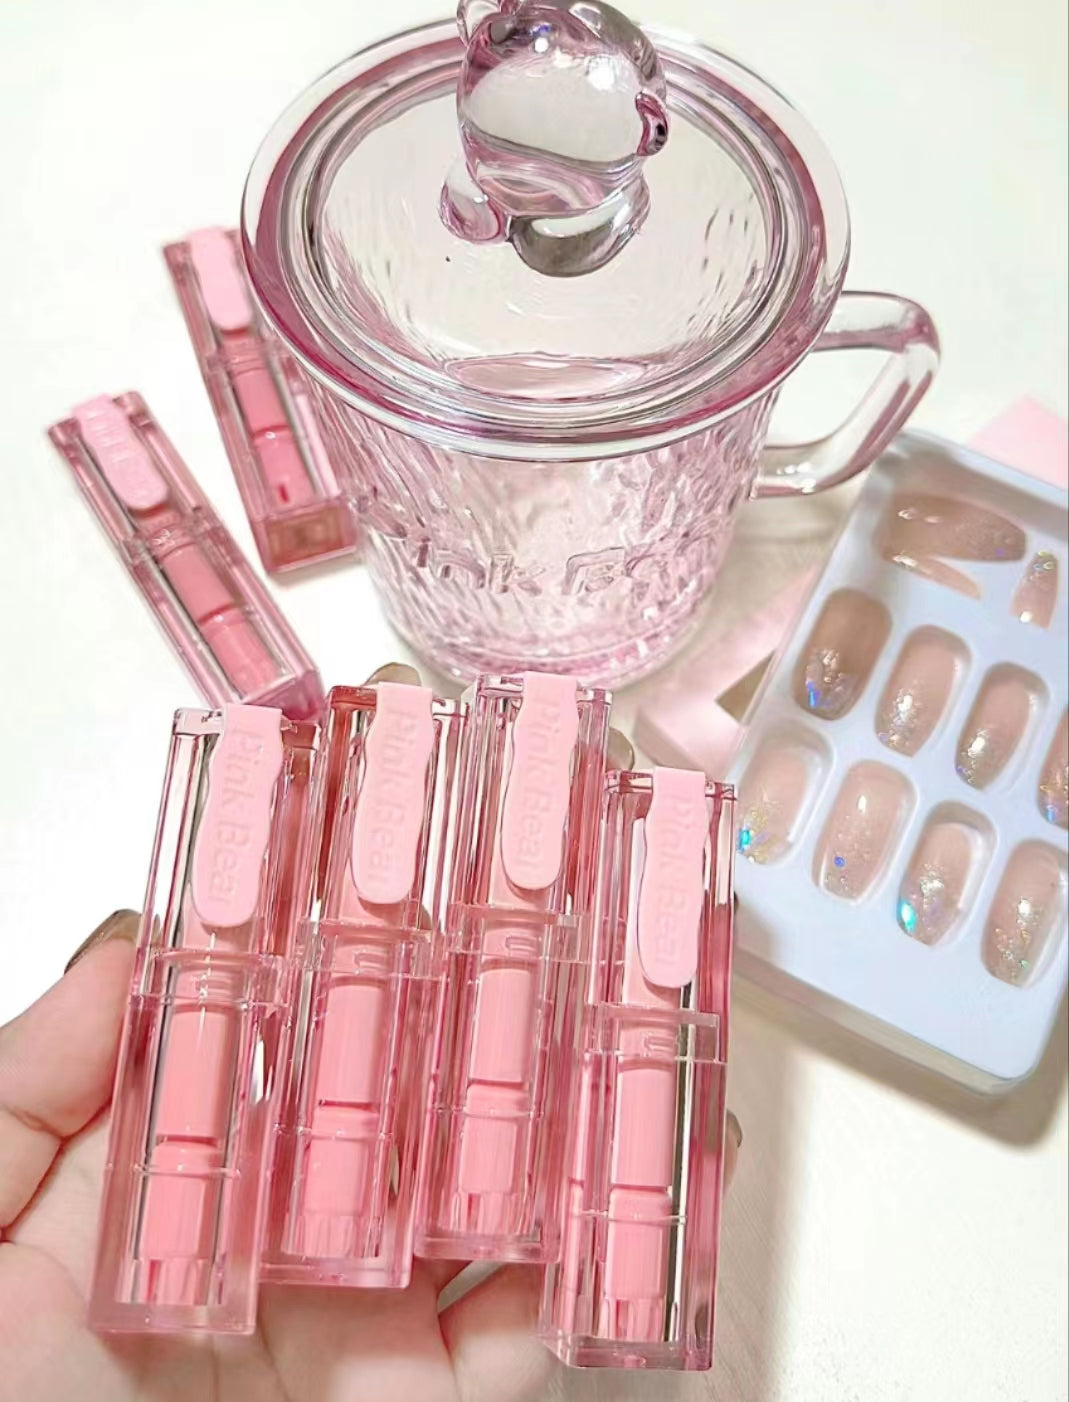 Pink Bear Lip Care Essence Milk Jelly Lipstick 皮可熊护唇精华奶冻口红 2.8g